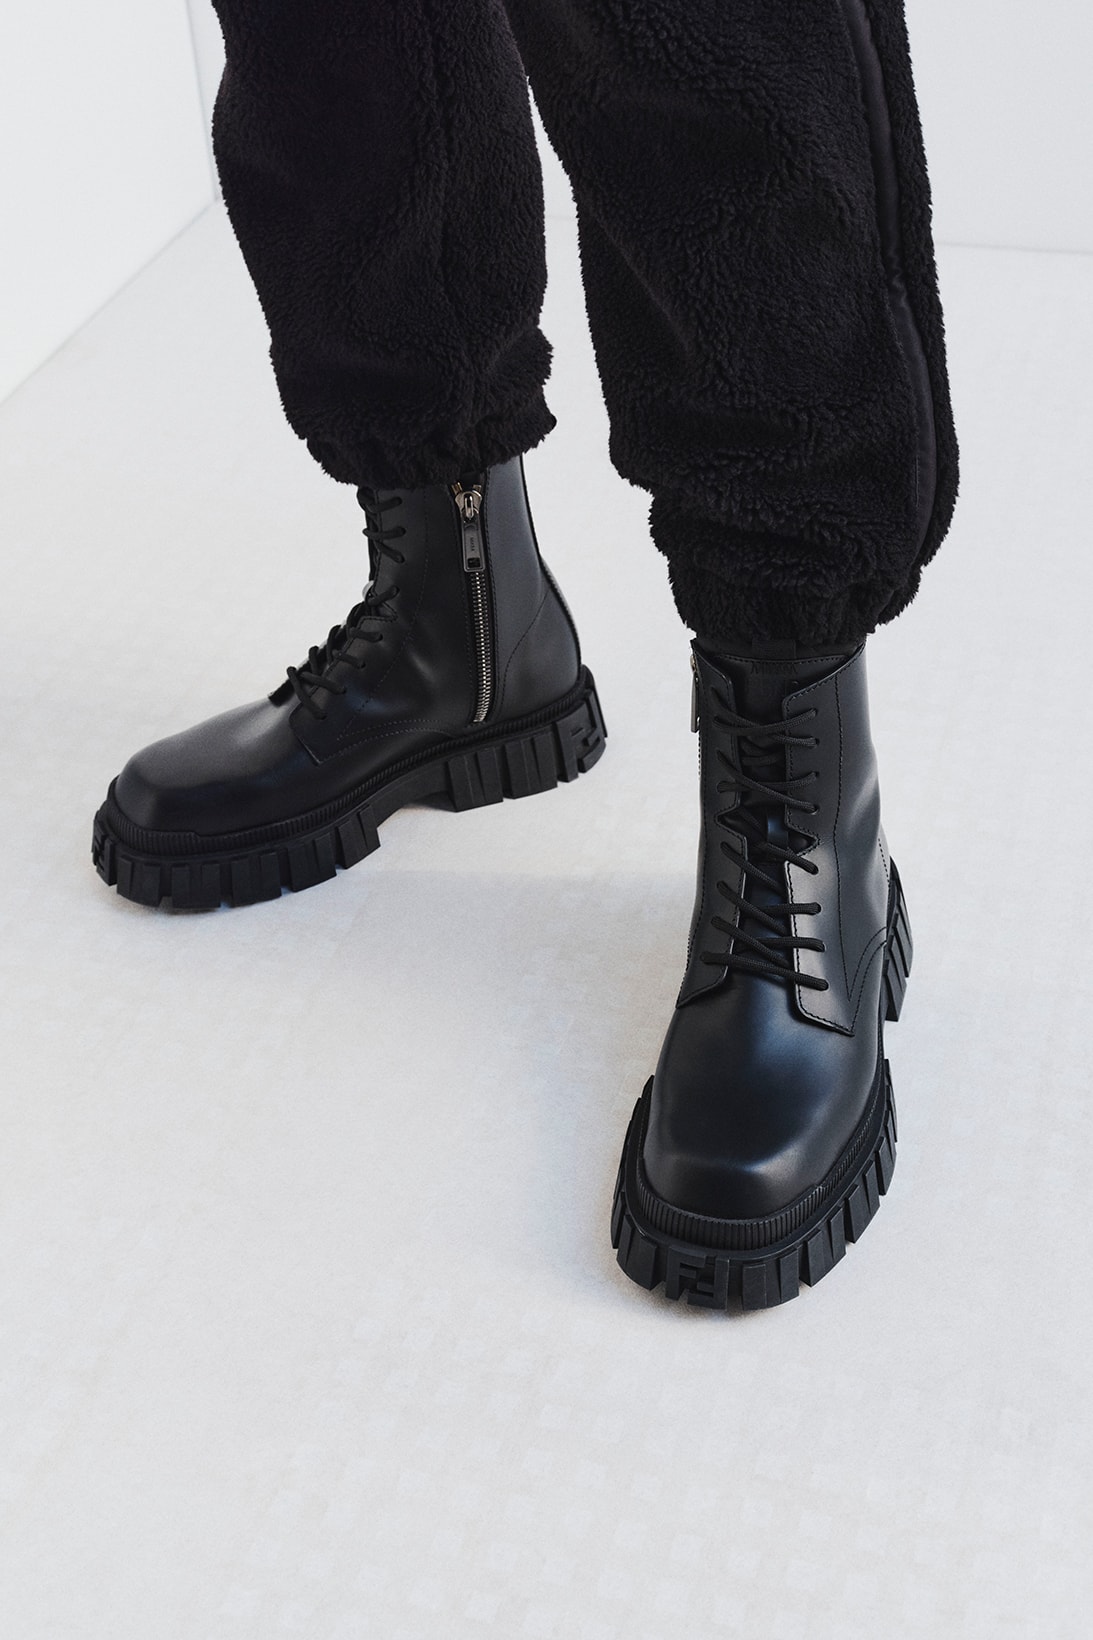 Fendi Skiwear Winter 2021 Collection Men boots